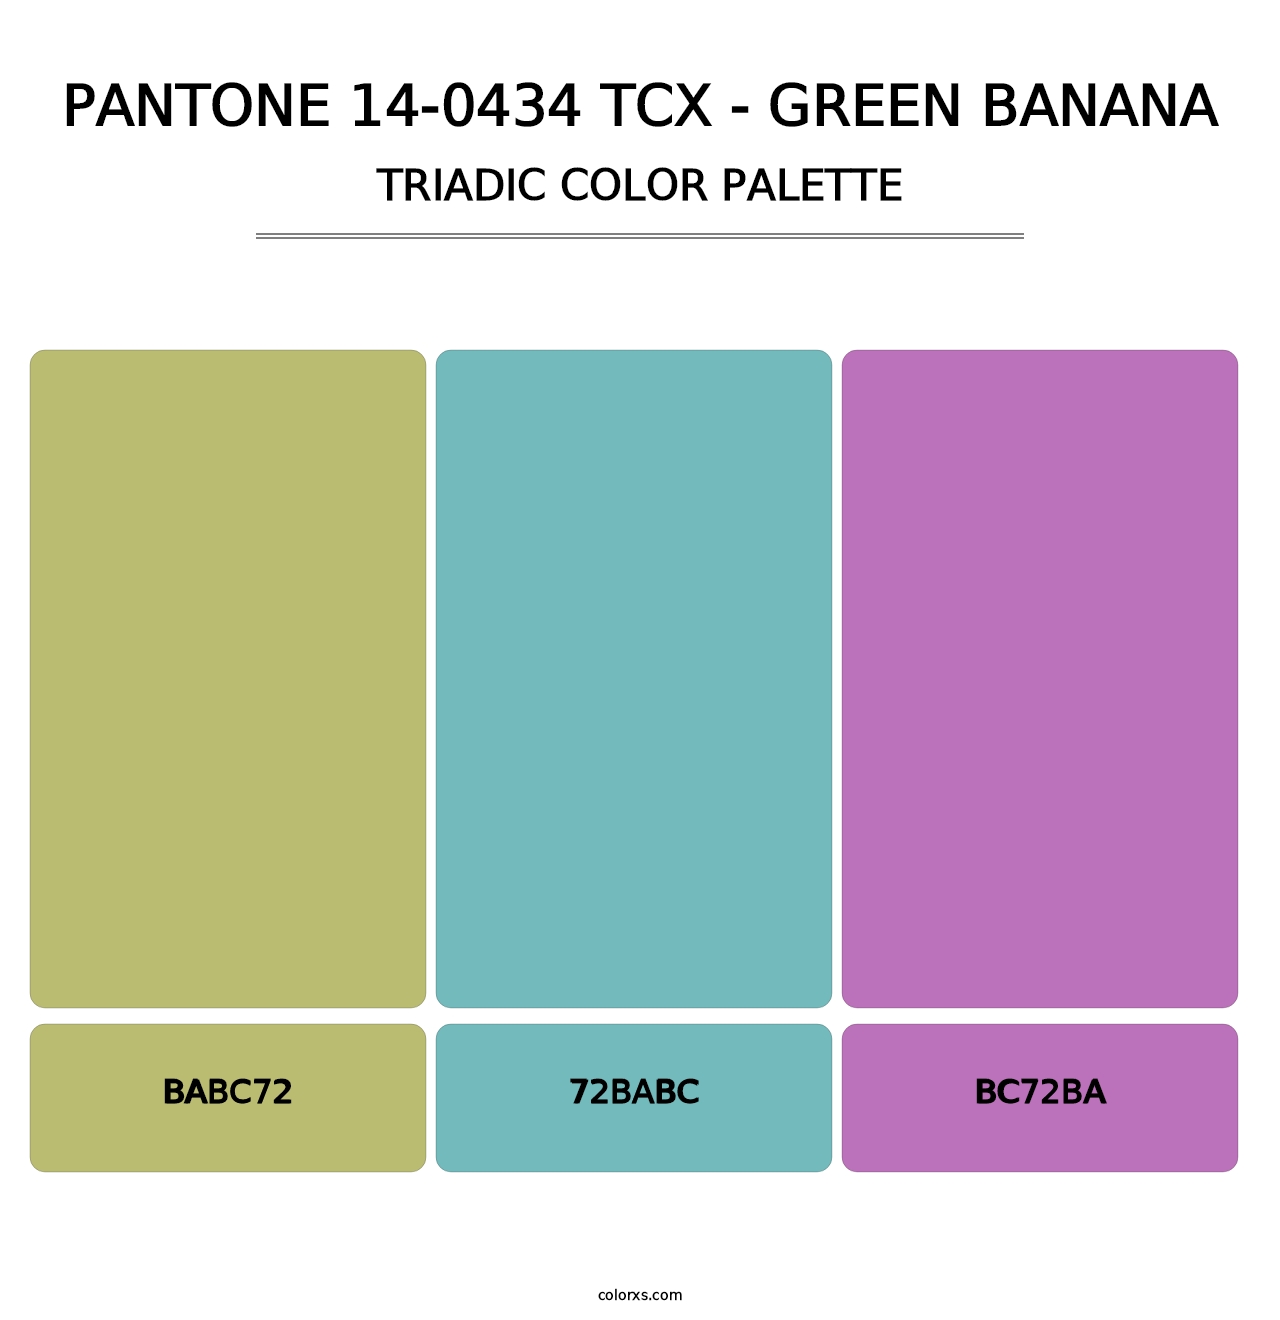 PANTONE 14-0434 TCX - Green Banana - Triadic Color Palette